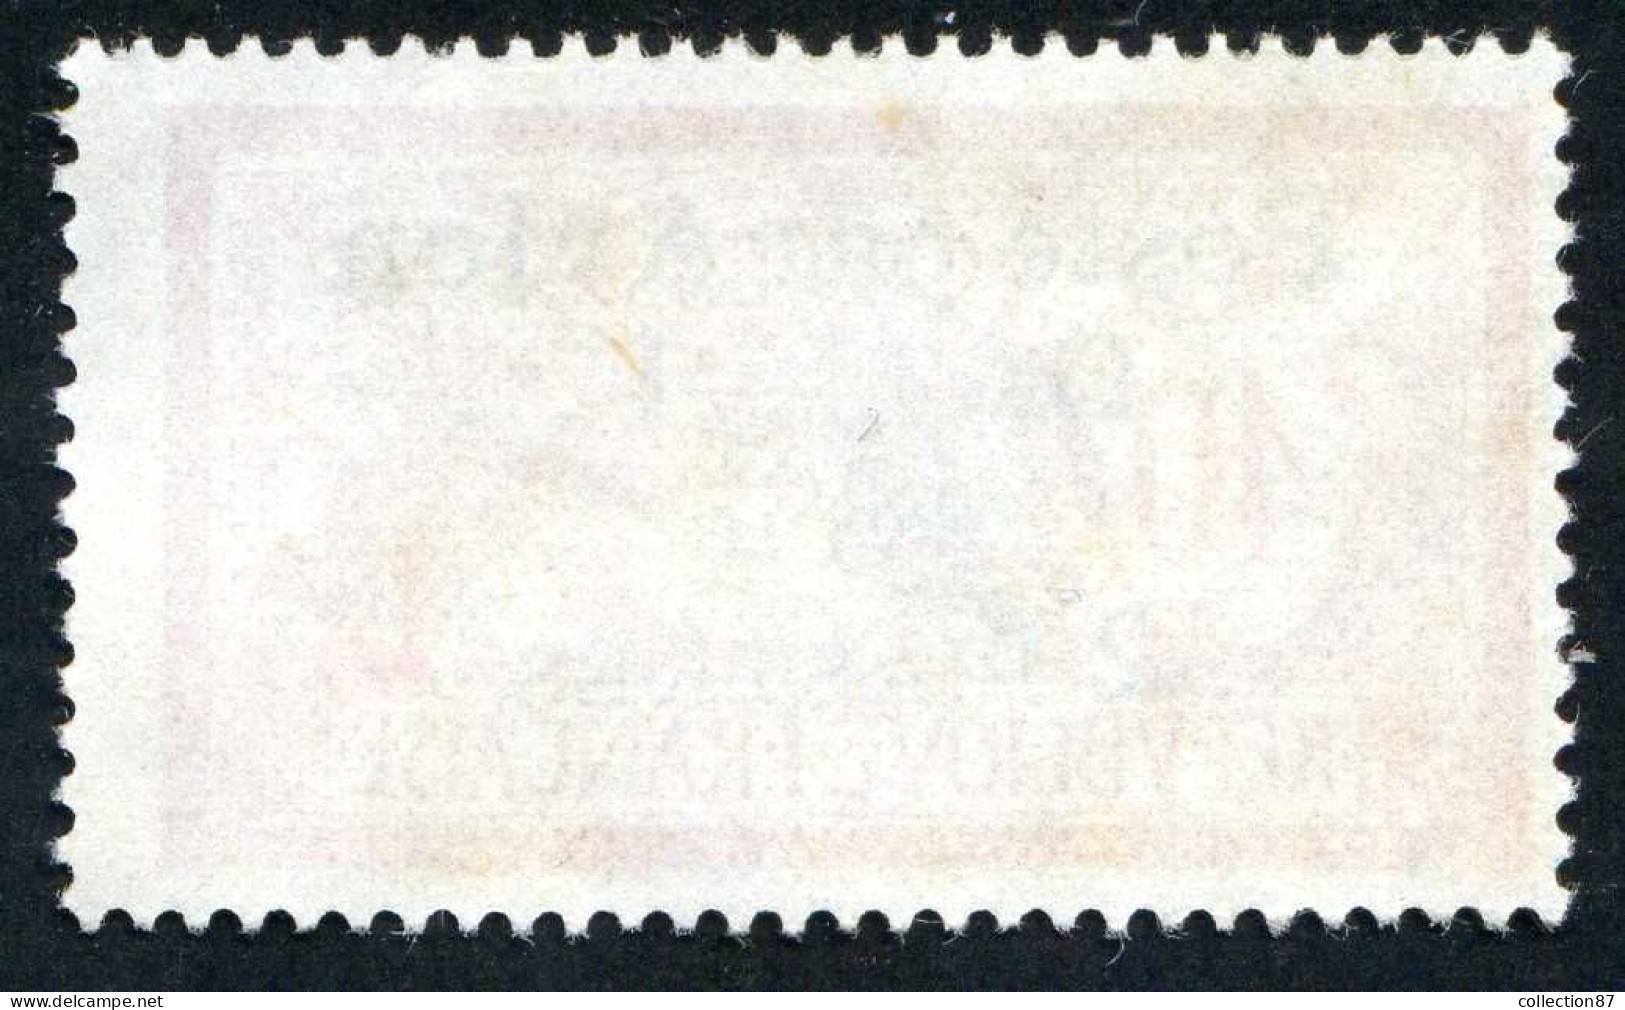 REF 086 > SYRIE < PA N° 10 > Ø < Oblitéré < Ø Used > Poste Aérienne - Aéro - Air Mail - Poste Aérienne